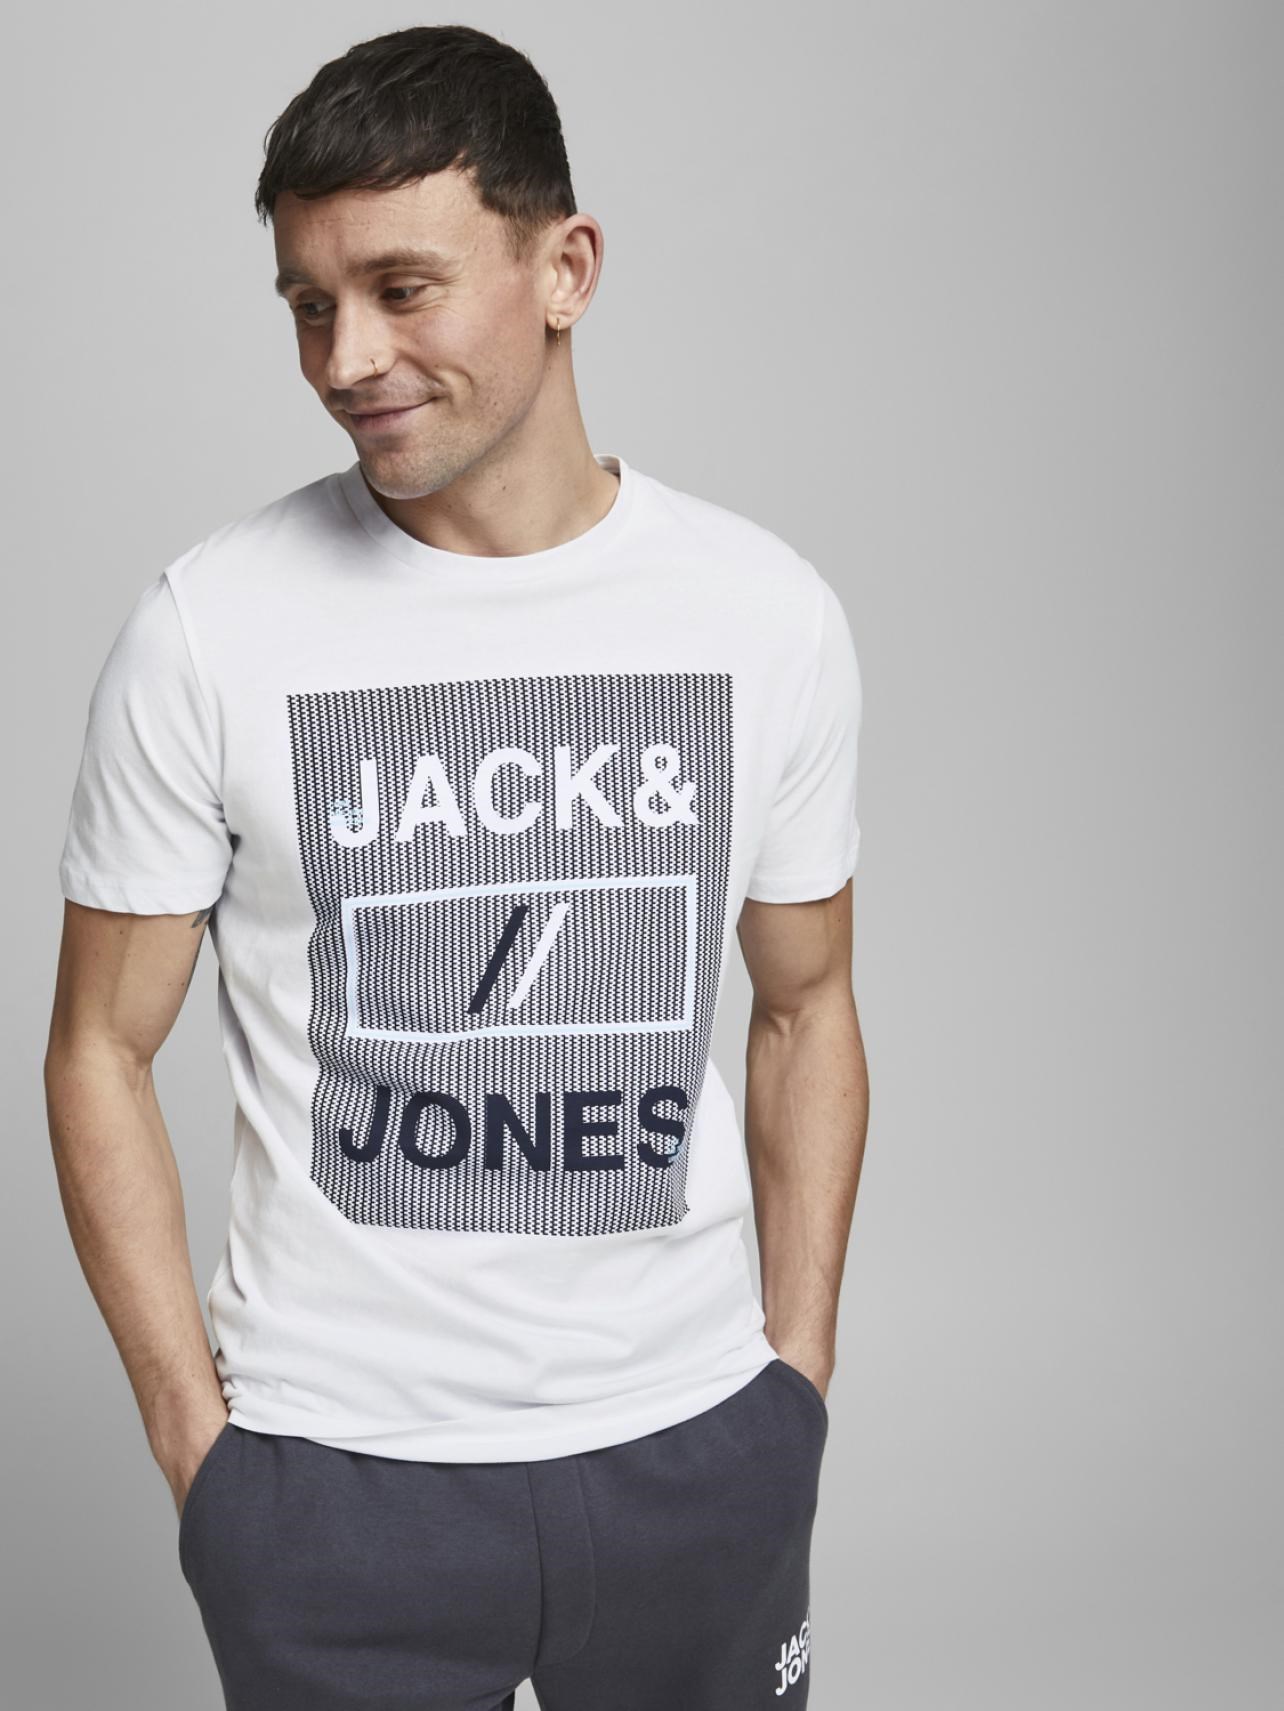 Jack Jones Erkek T-Shirt 12188039 White